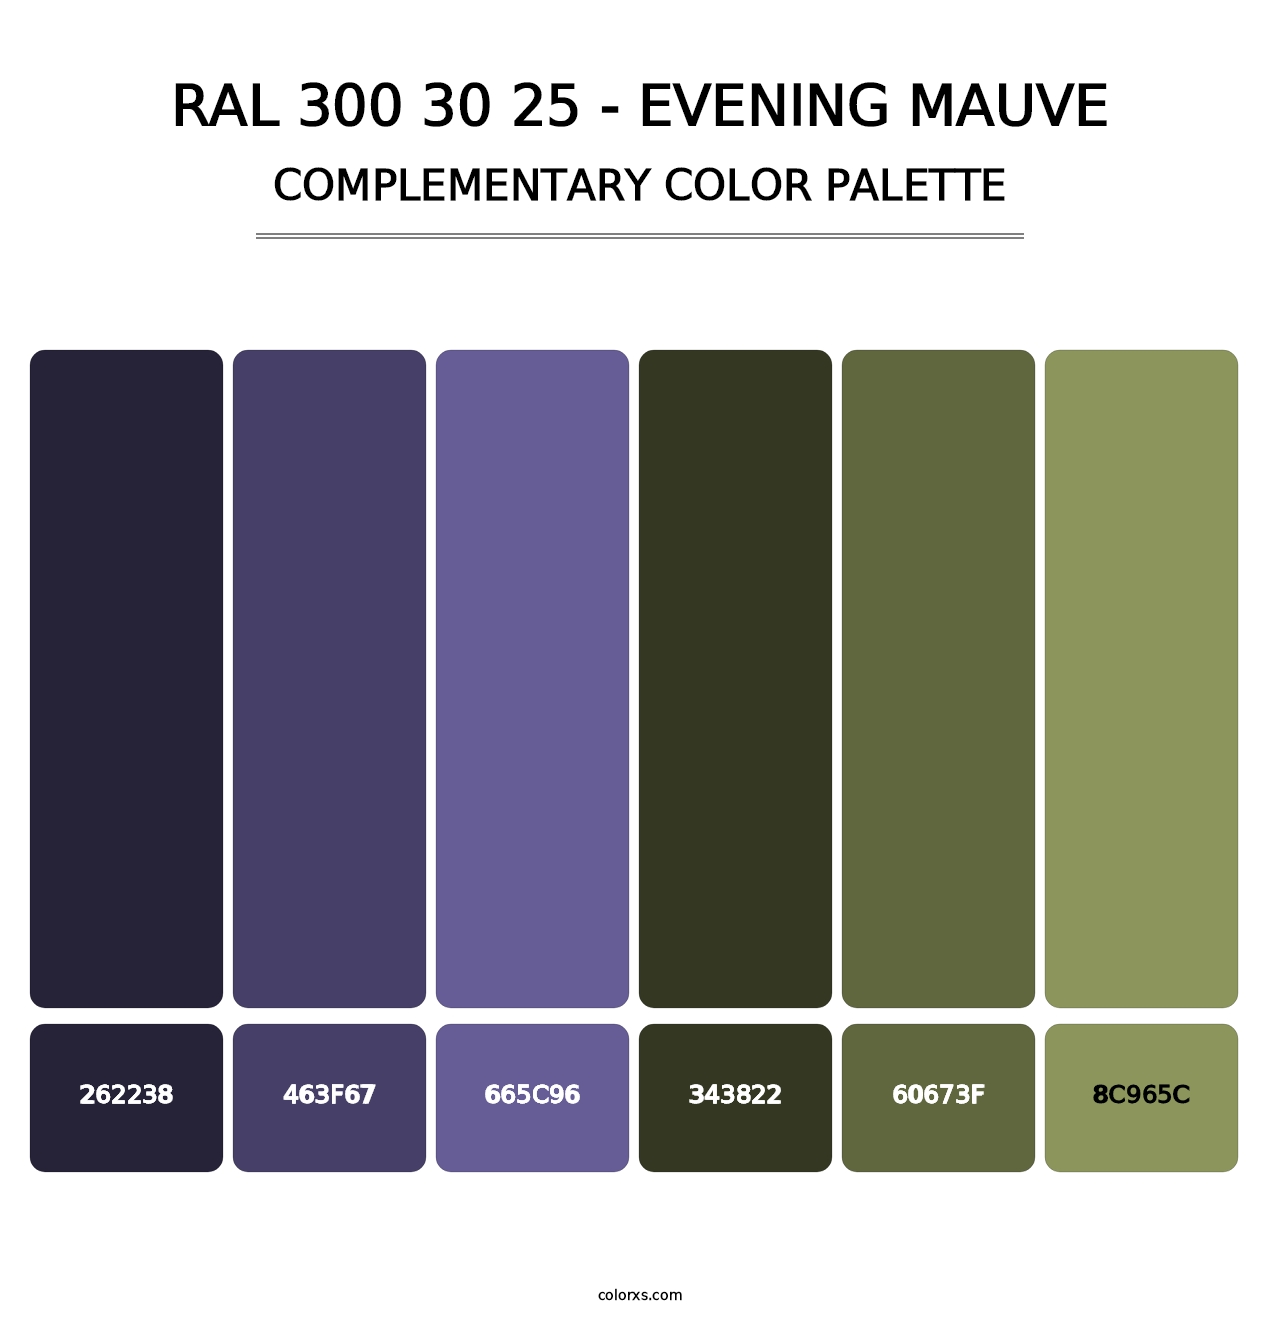 RAL 300 30 25 - Evening Mauve - Complementary Color Palette